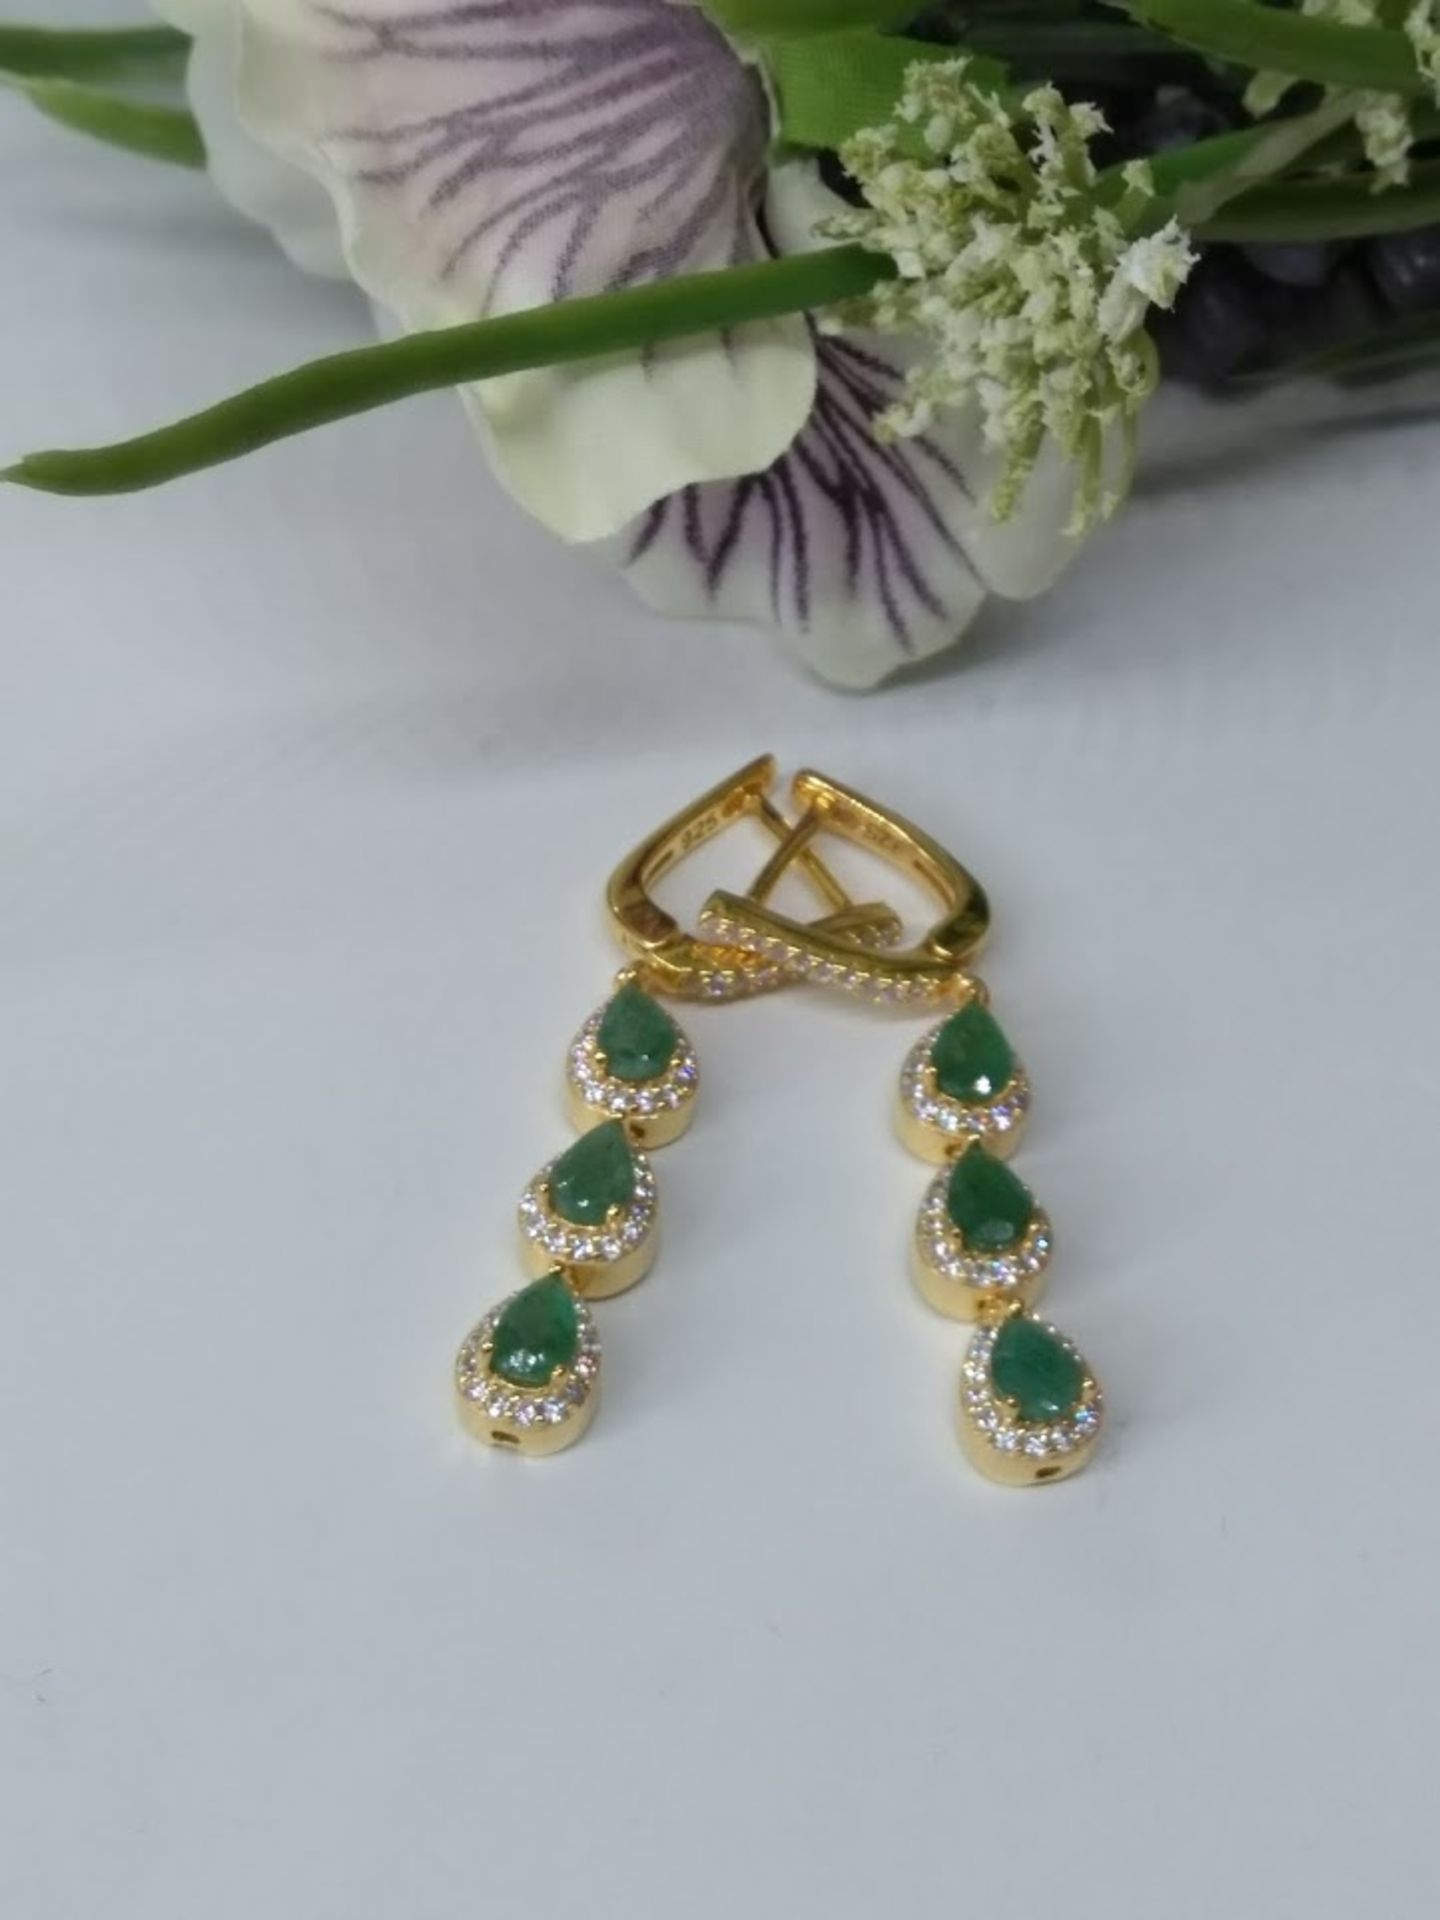 Gorgeous Pear Cut Rich Green Natural Brazilian Emerald Gemstones (6) Earrings, Bespoke - Unique - Image 2 of 2